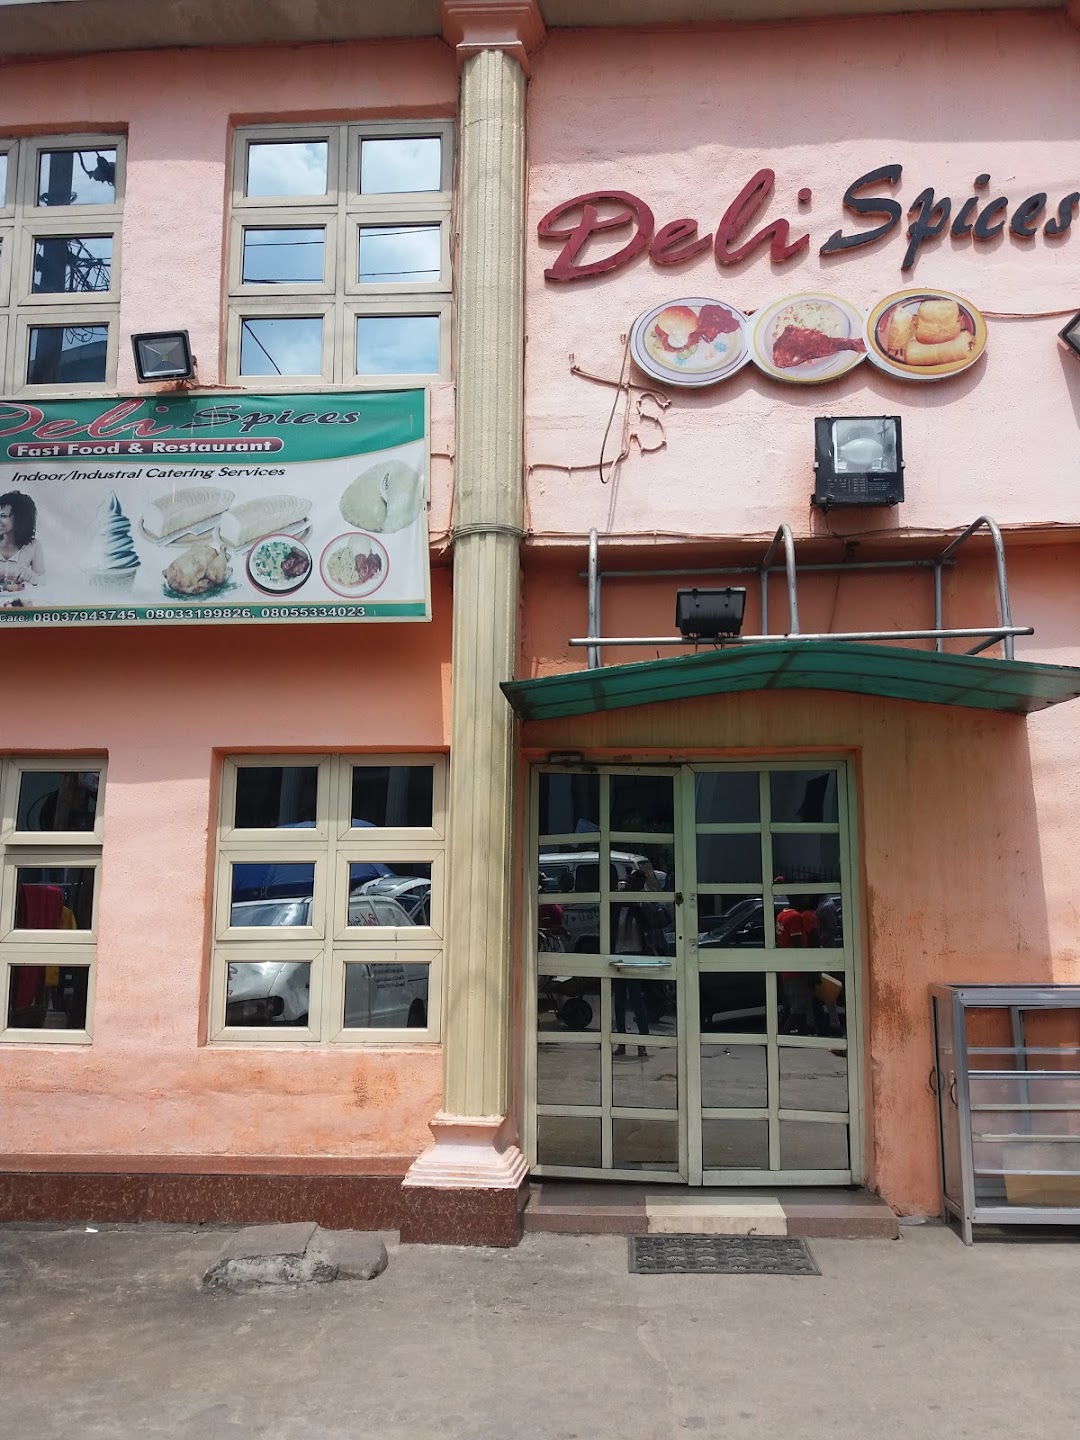 Deli Spices Restaurant